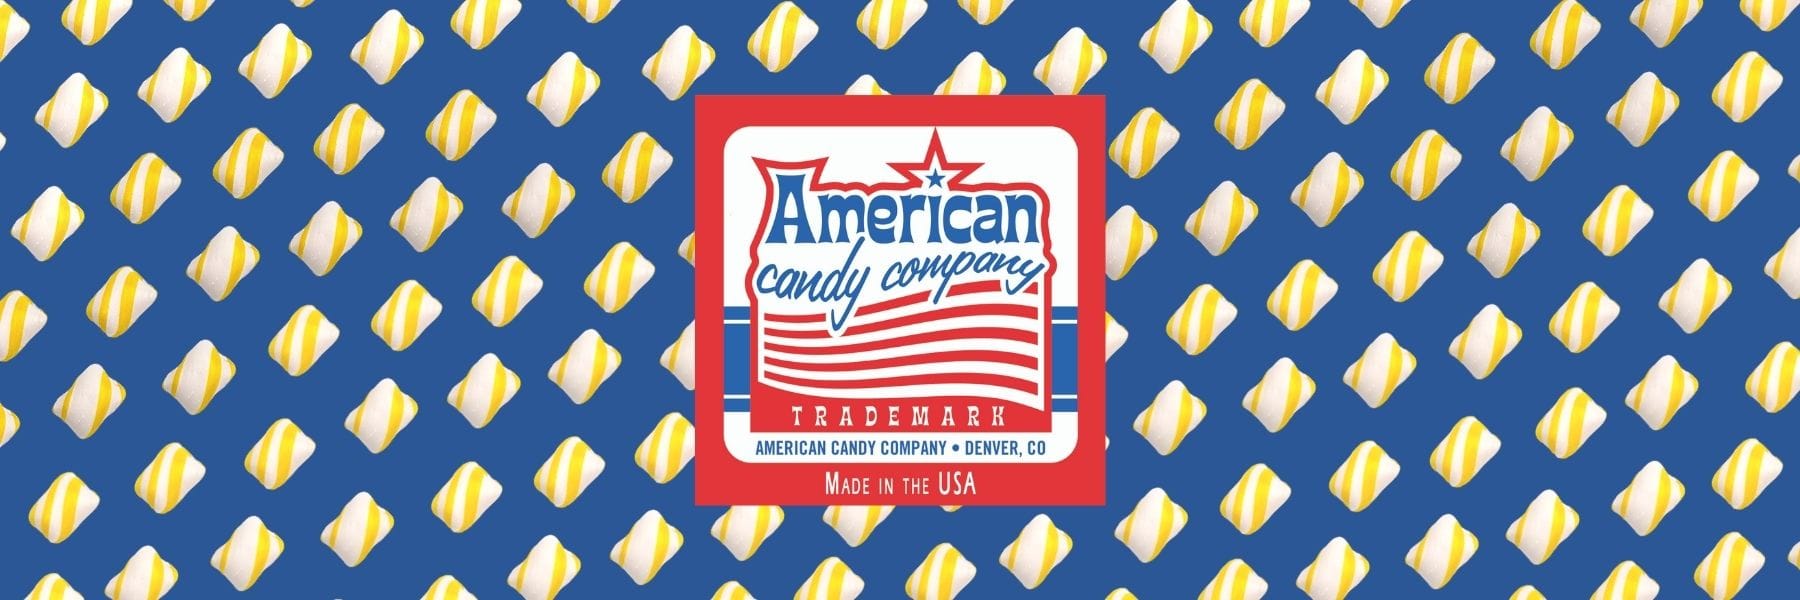 American Candy Company